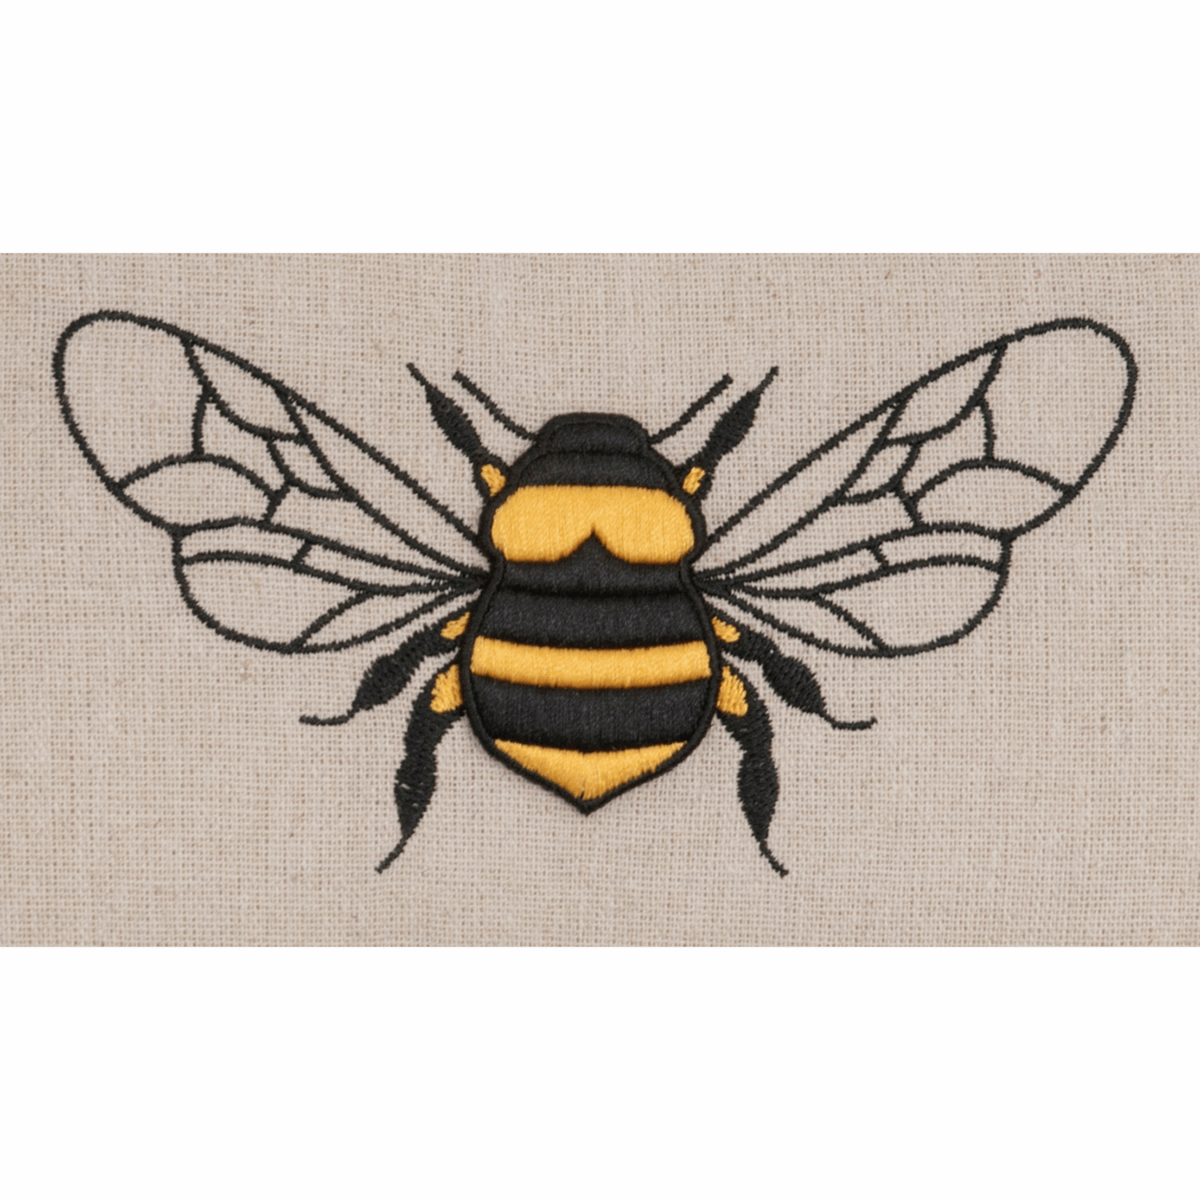 Appliqué Bee Craft Tote Shoulder Bag